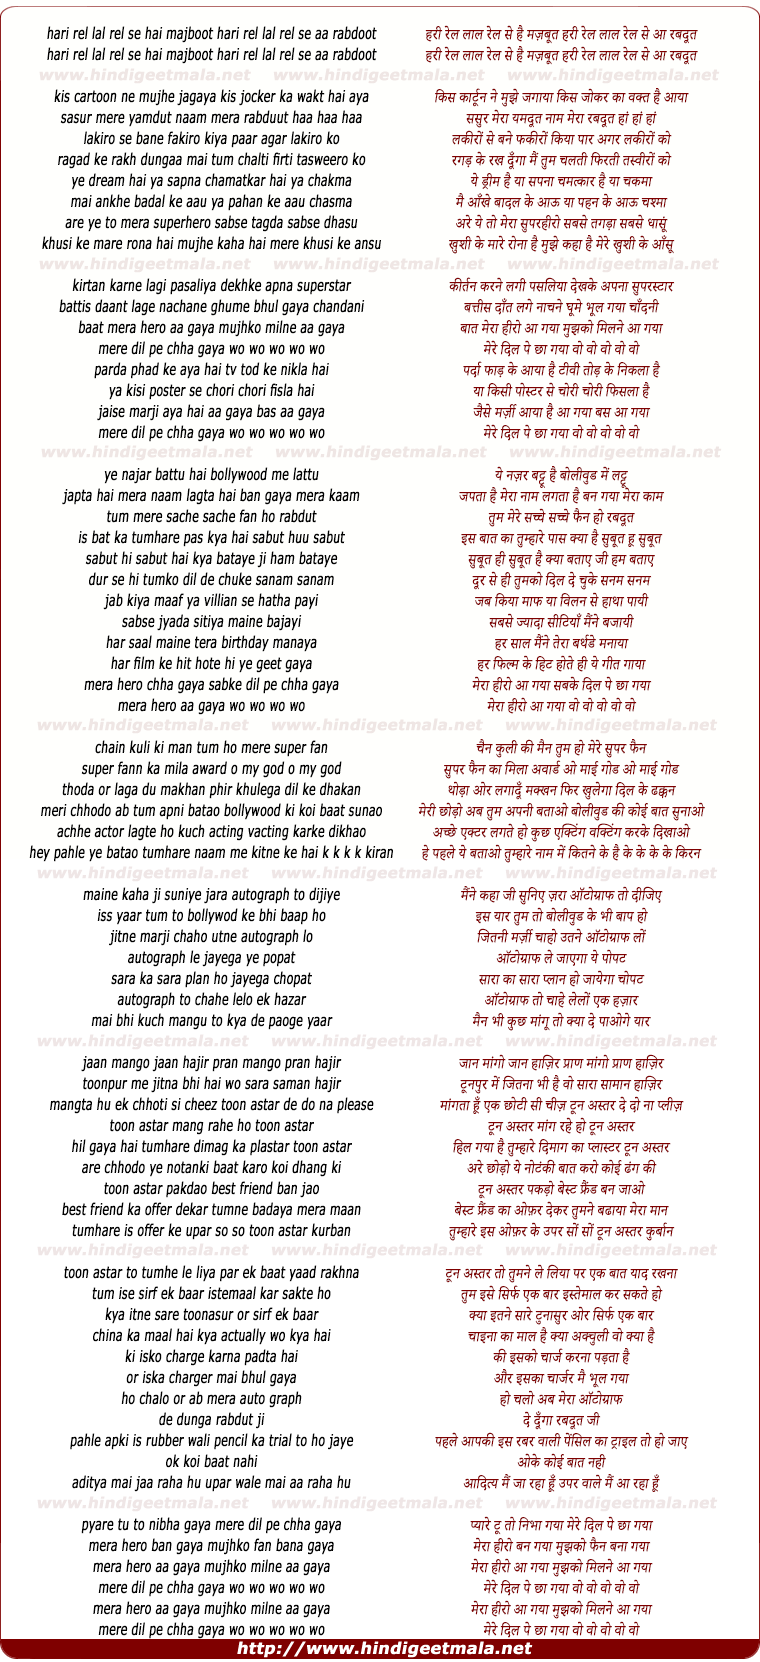 lyrics of song Rabdoot